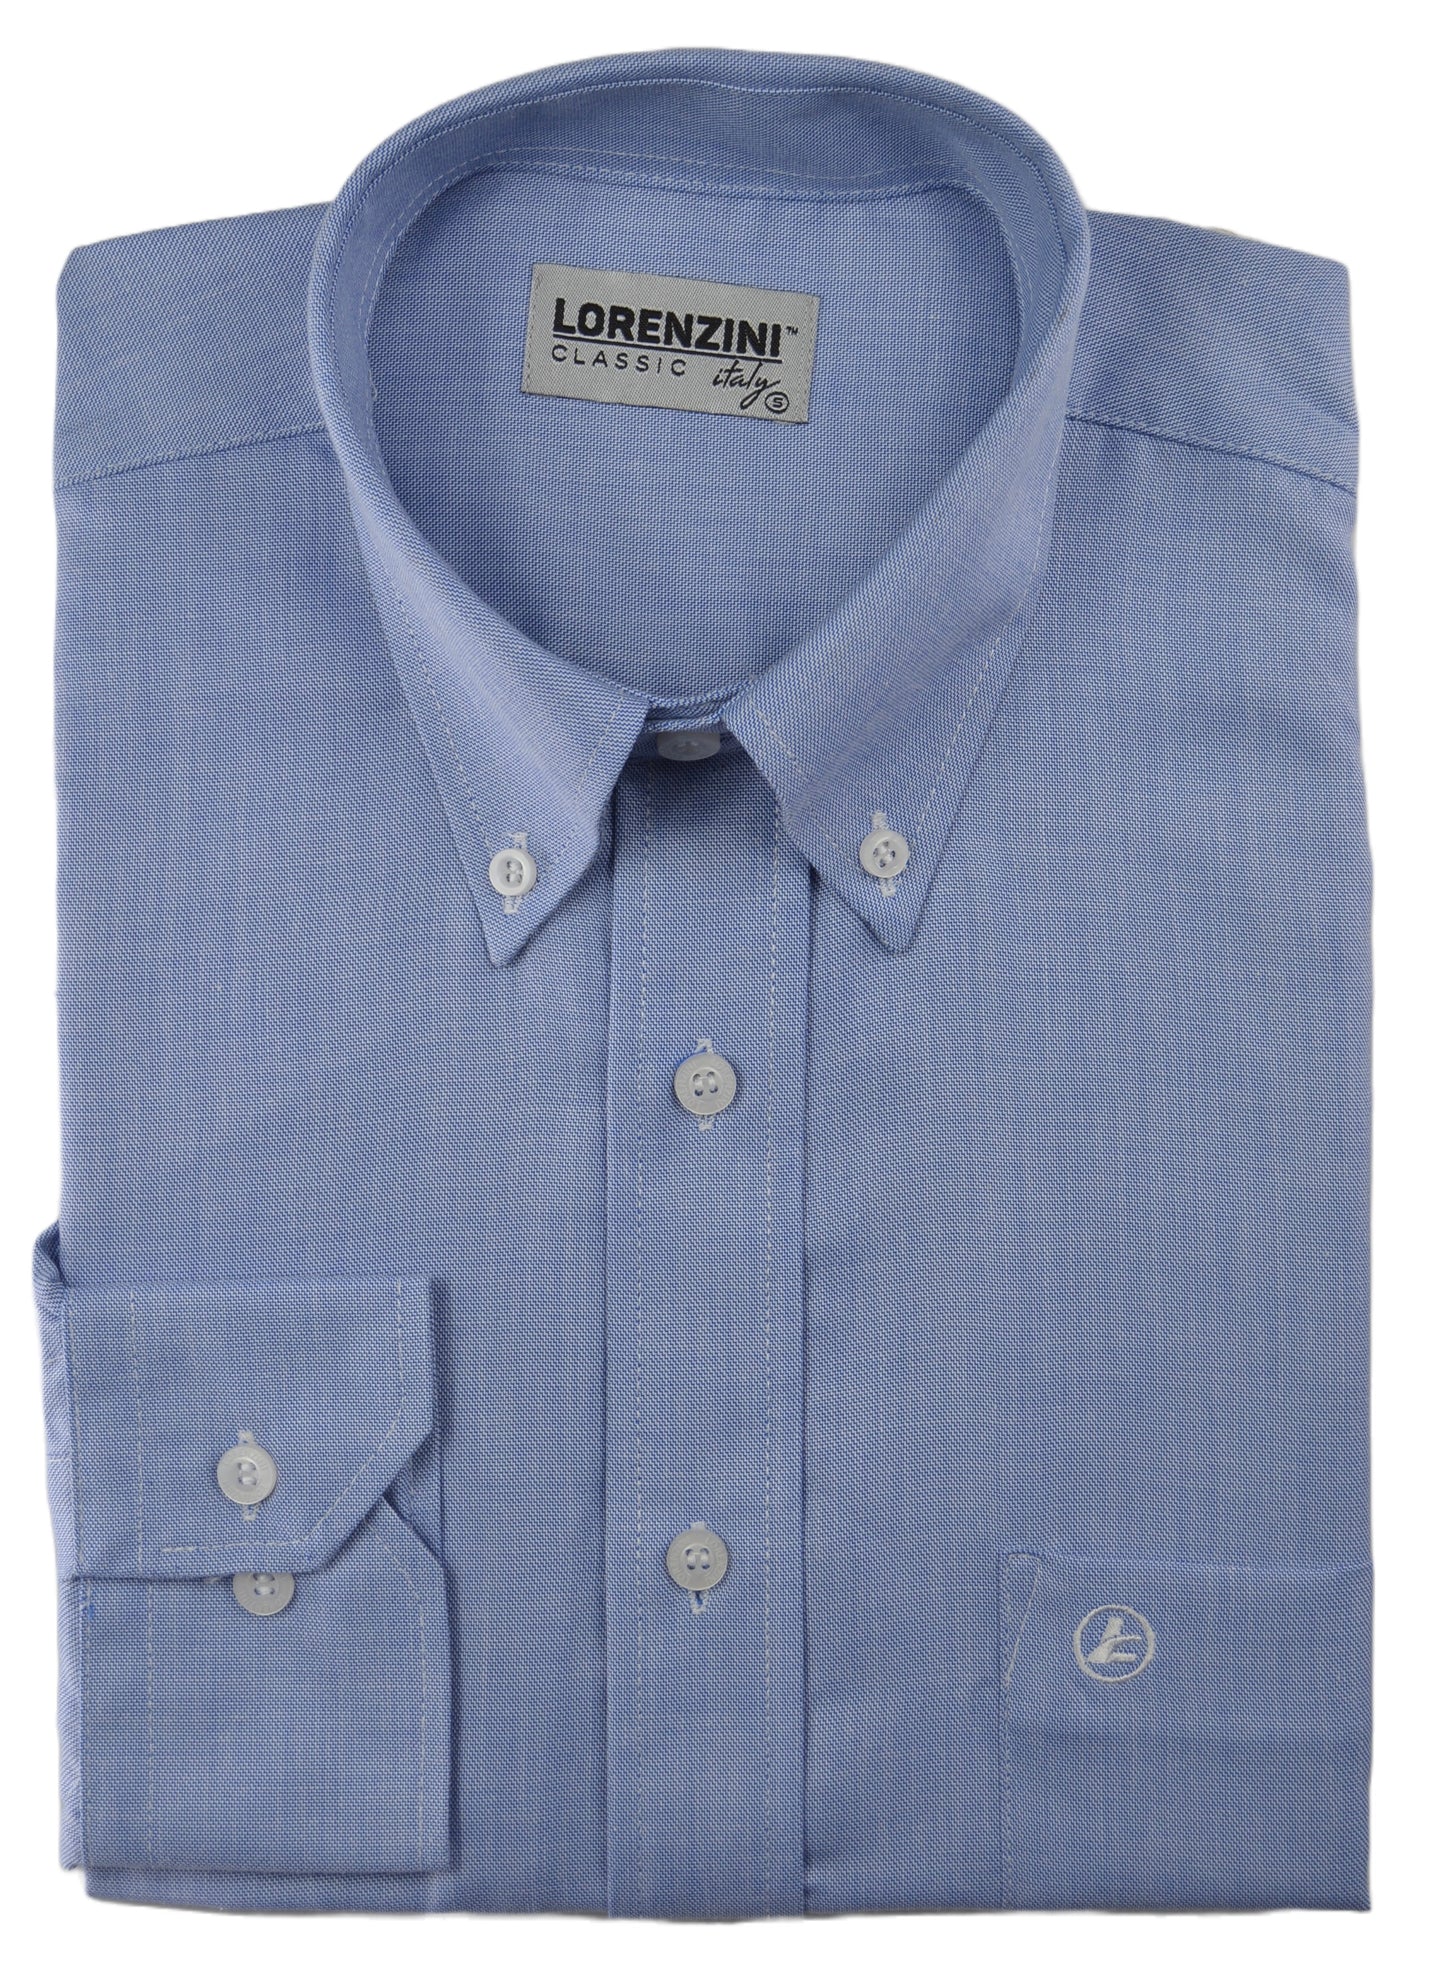 Lorenzini Classic Oxford Blue Shirt